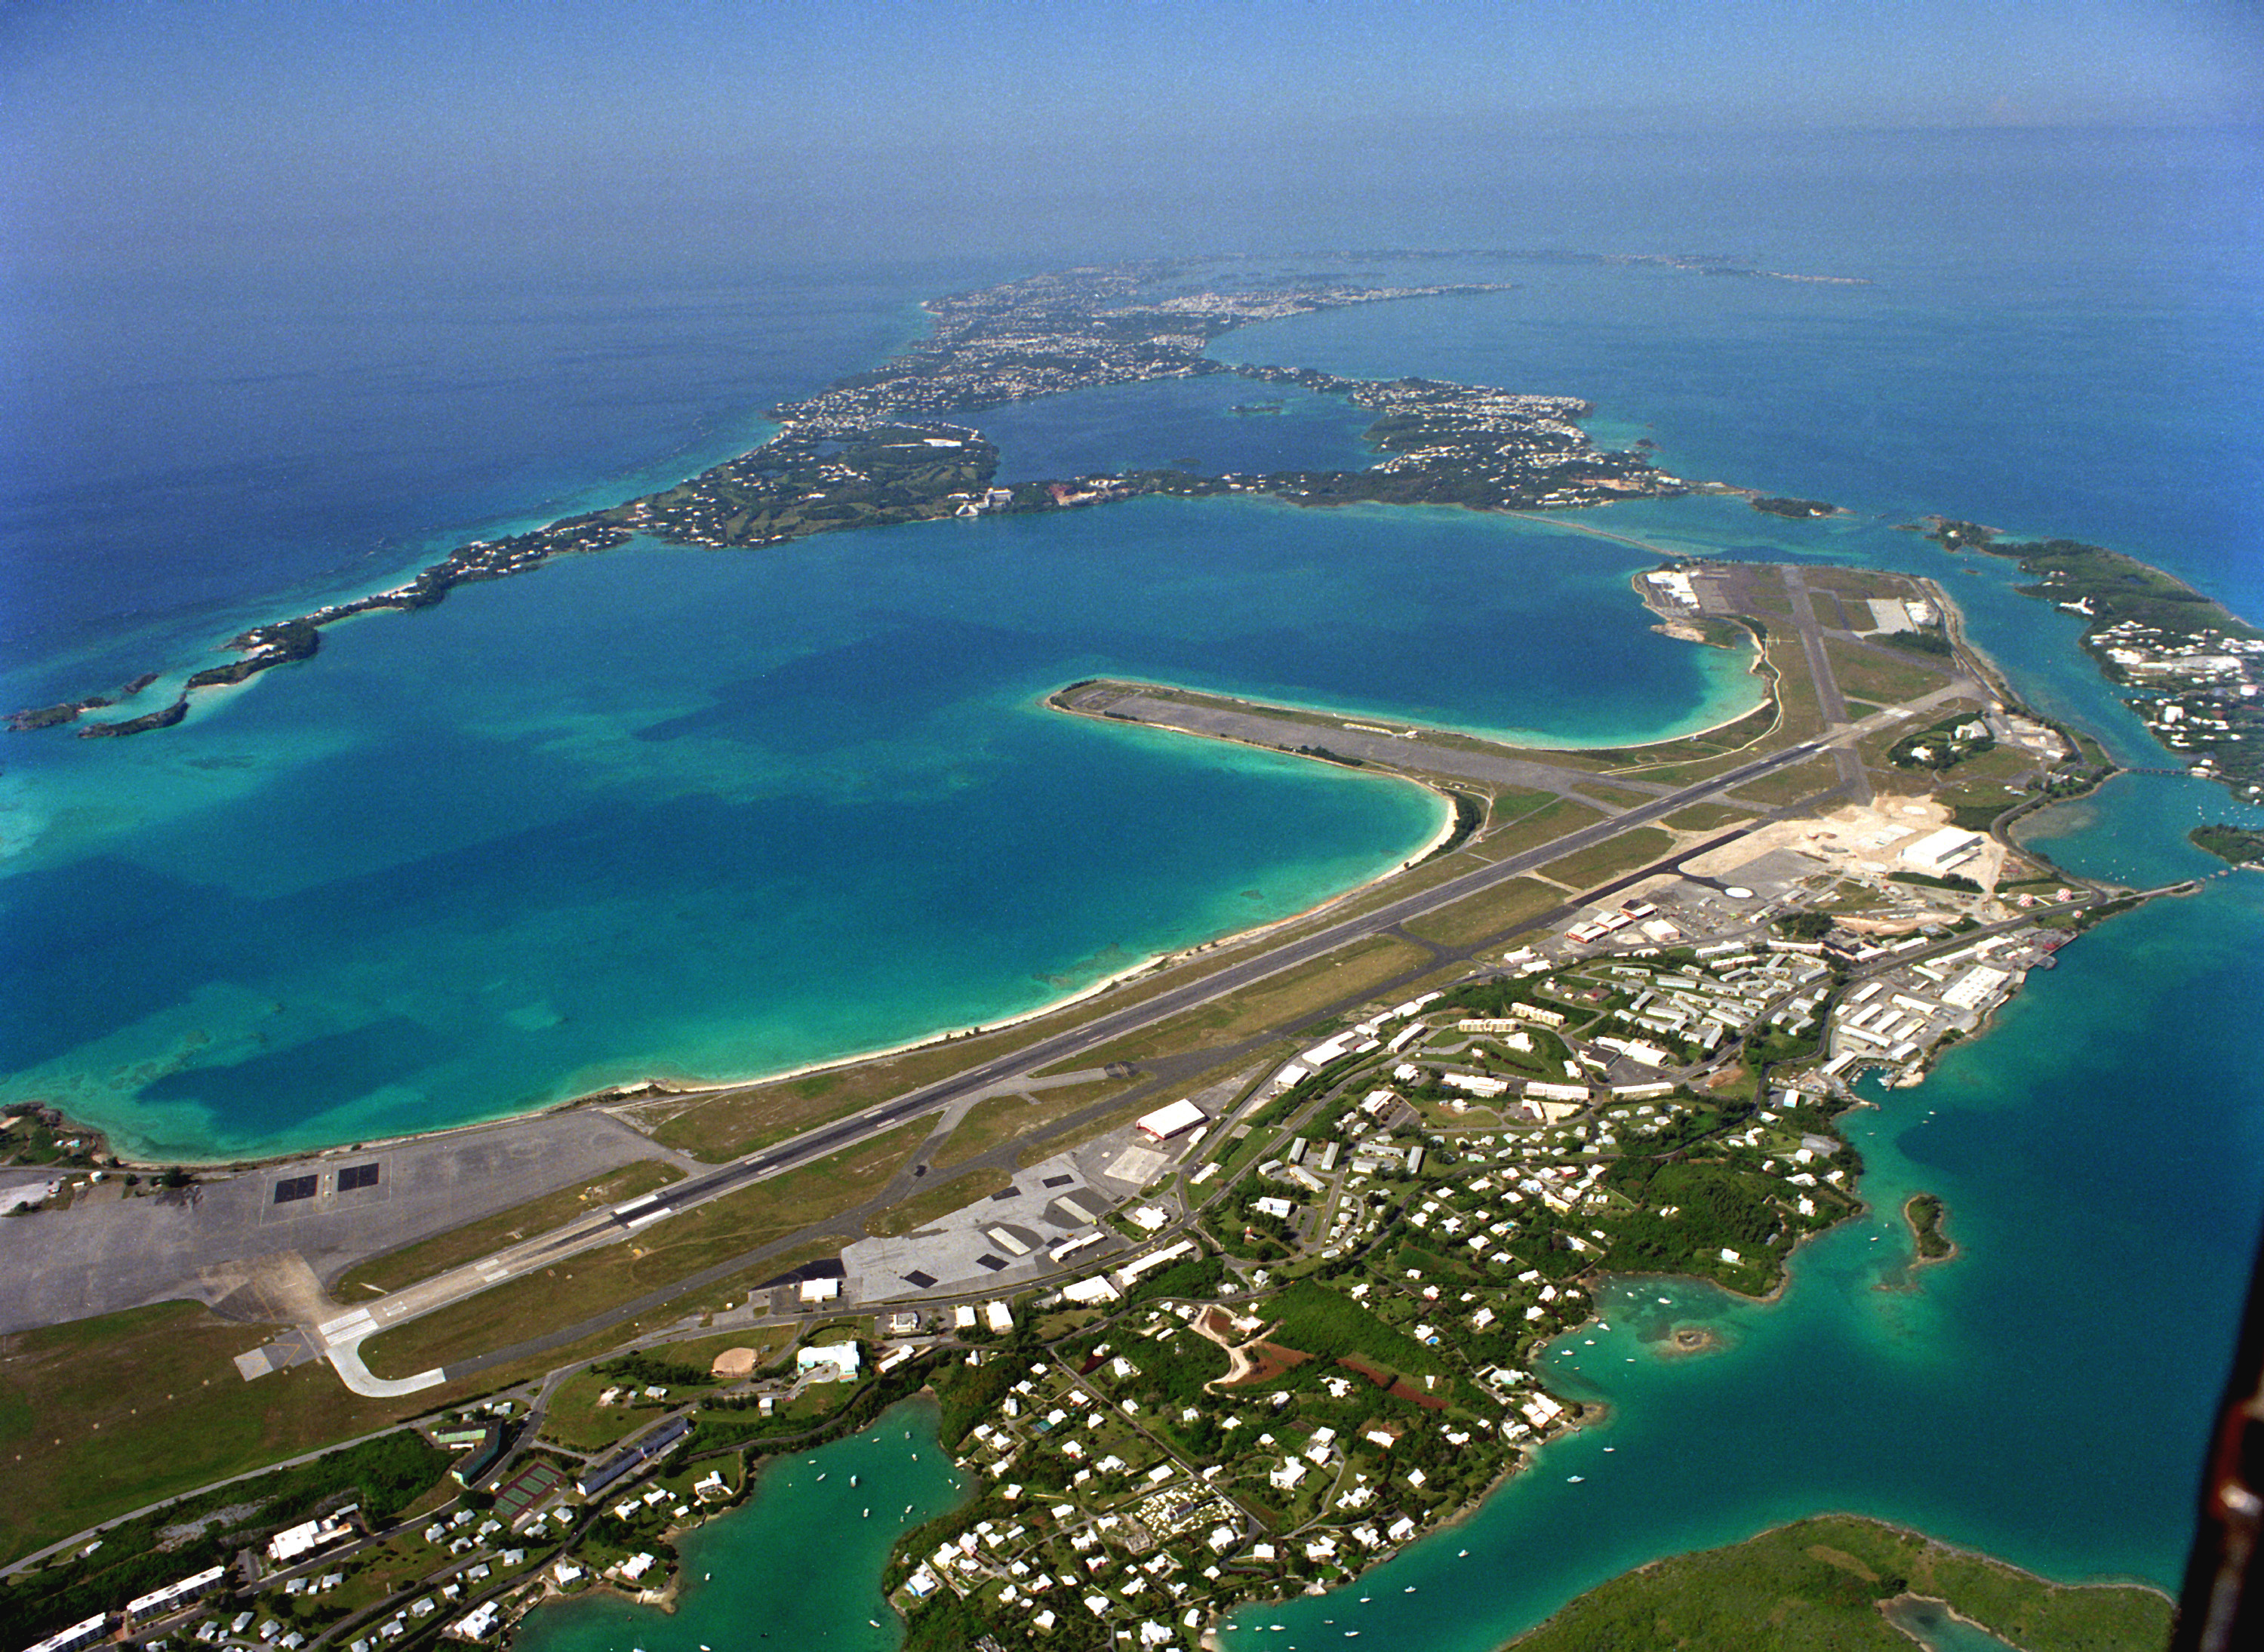 NAS Bermuda aerial view02 1993